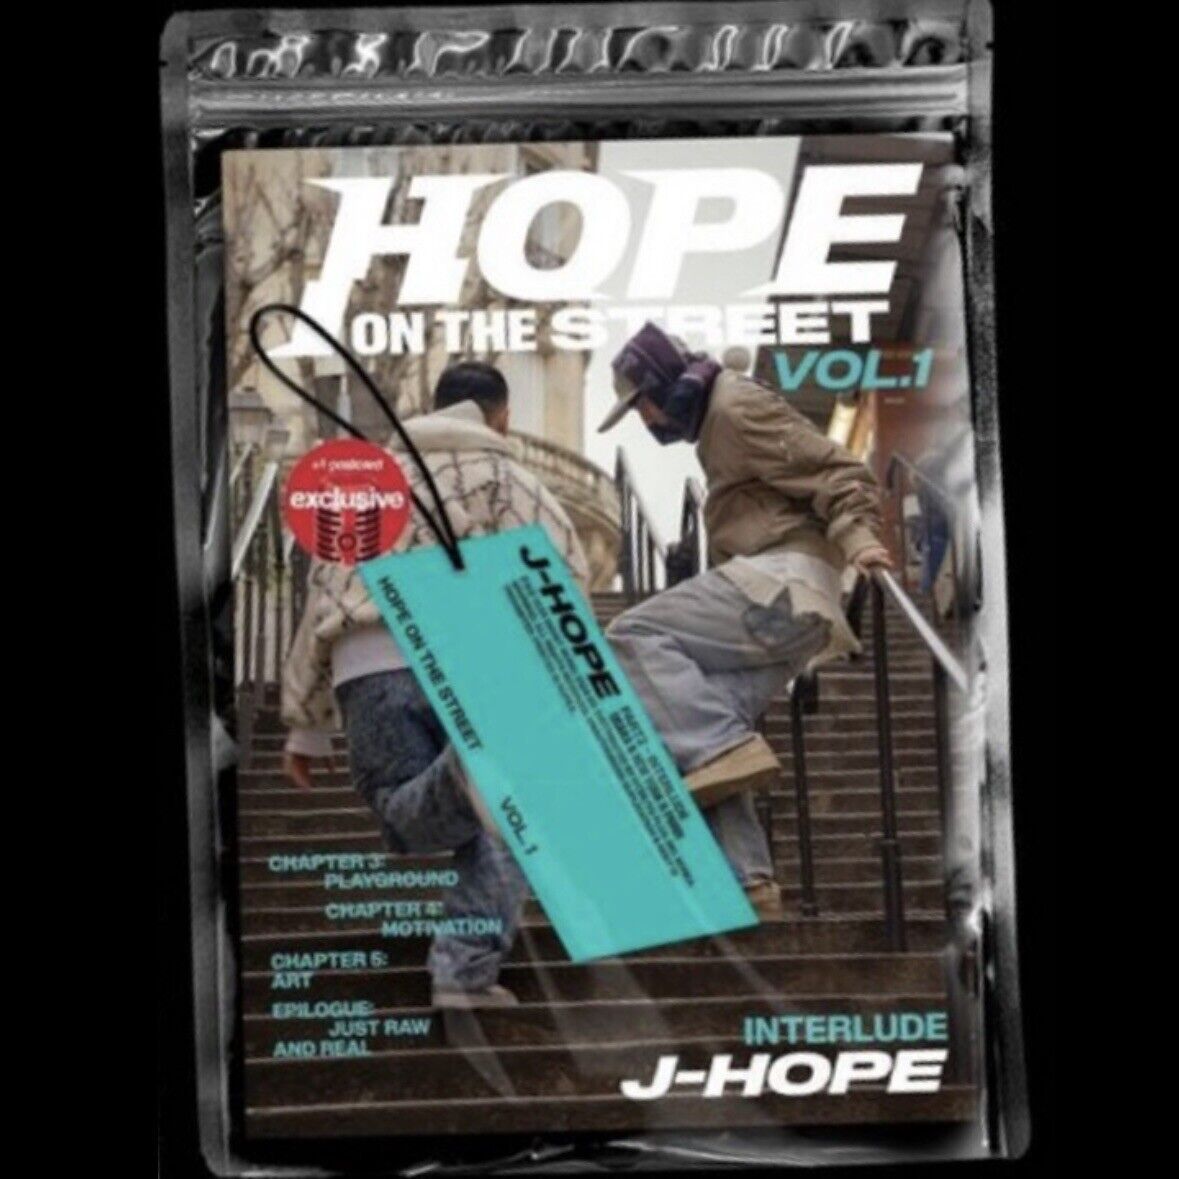 j-hope (BTS) - HOPE ON THE STREET VOL.1 (Target Exclusive) CD - Interlude